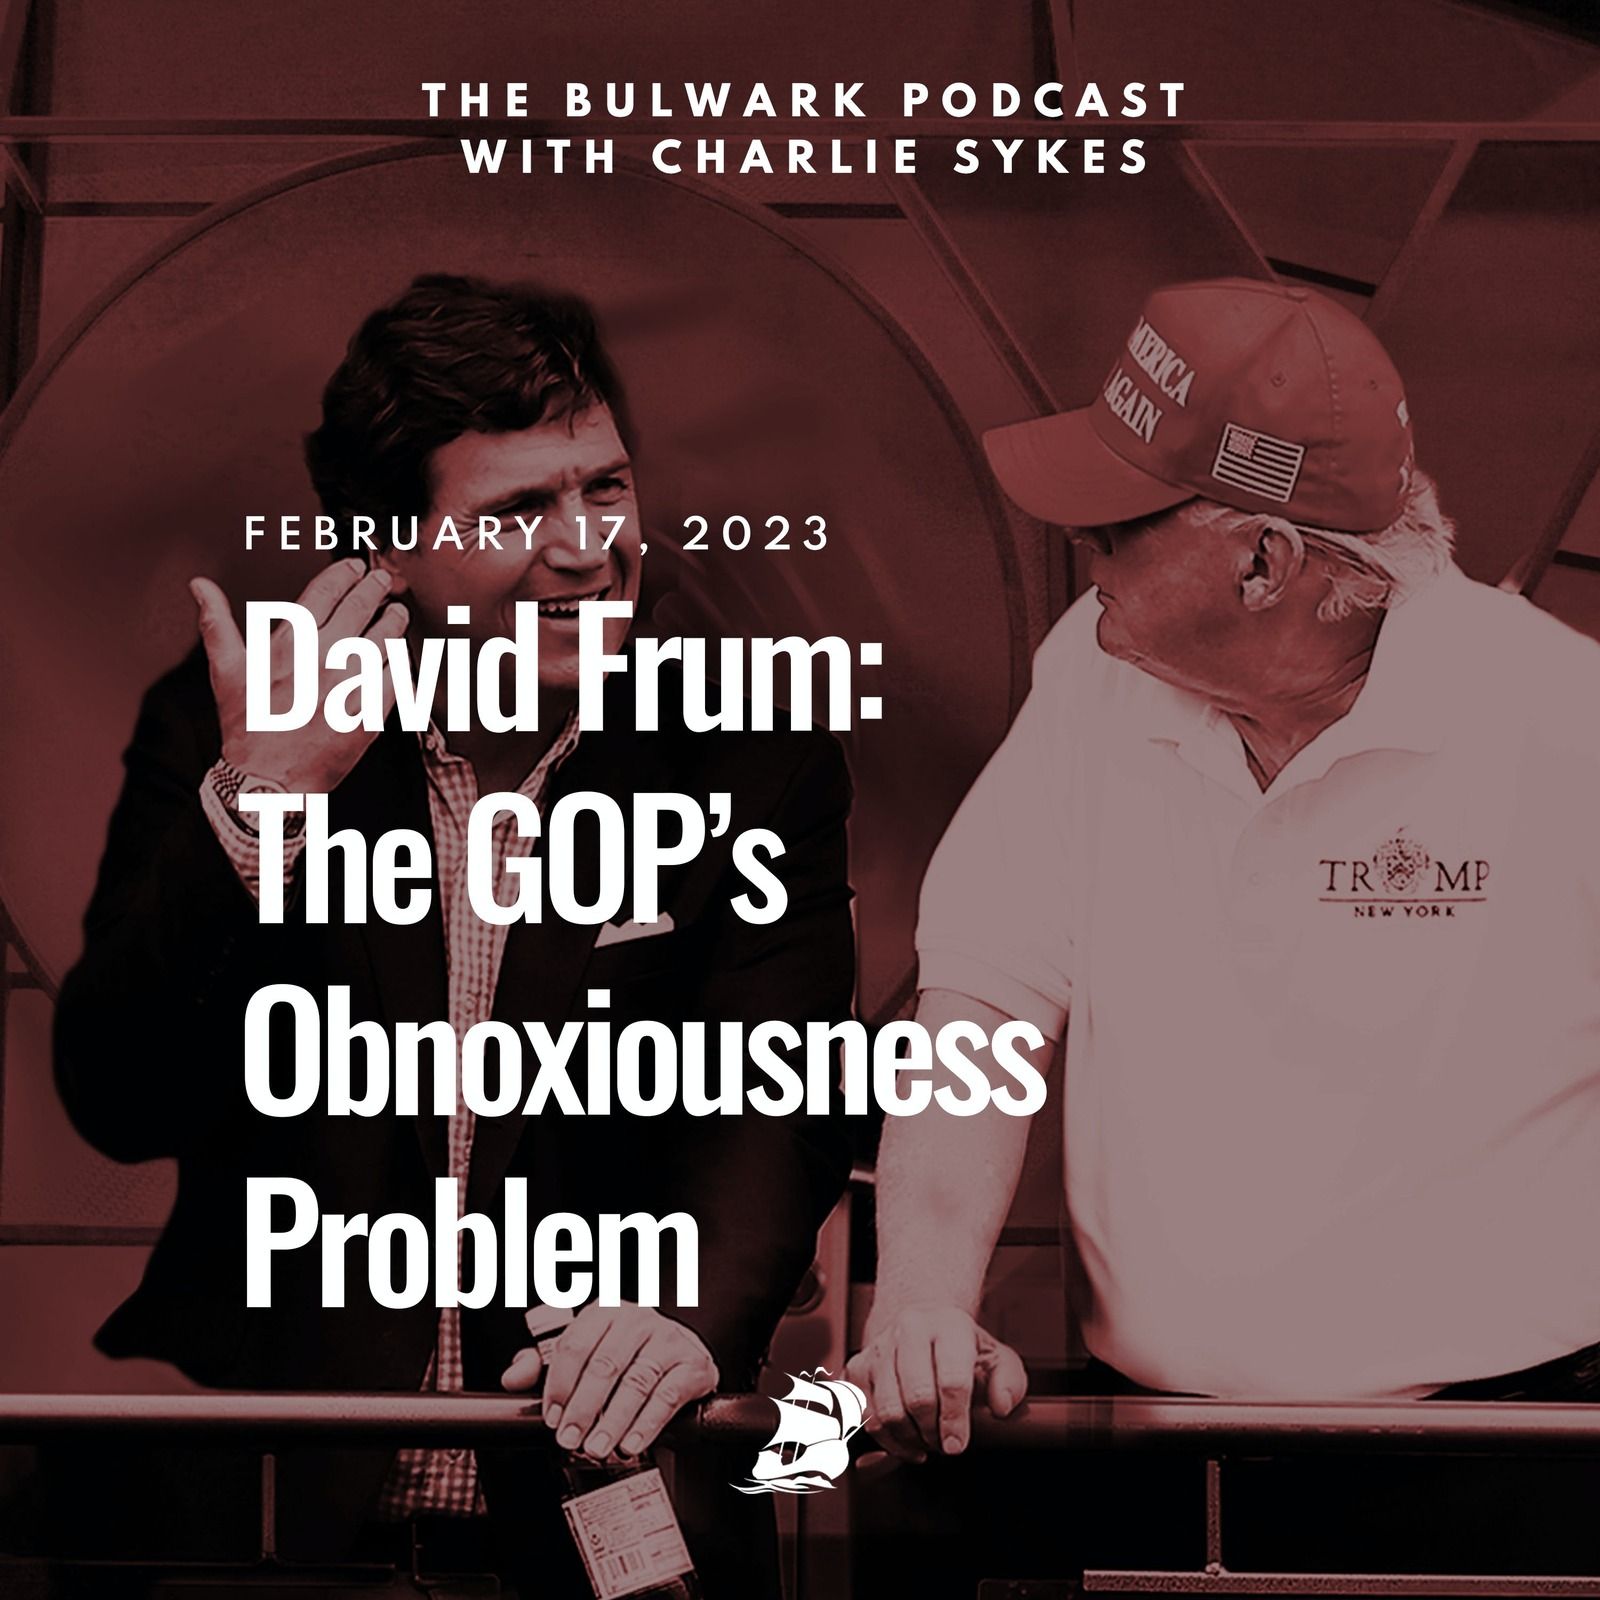 David Frum: The GOP’s Obnoxiousness Problem  by The Bulwark Podcast